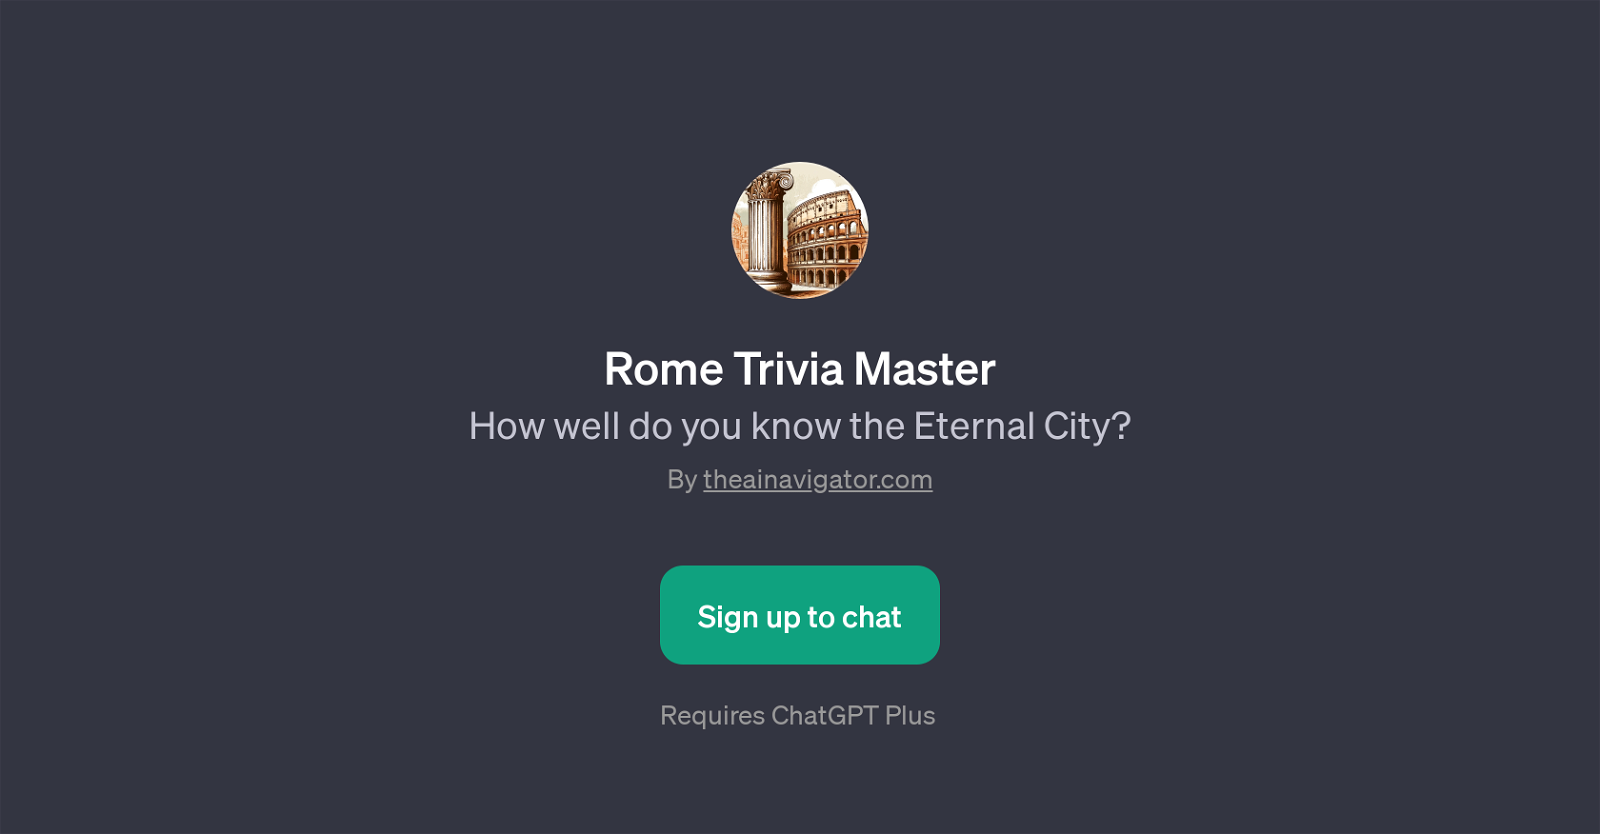 Rome Trivia Master website